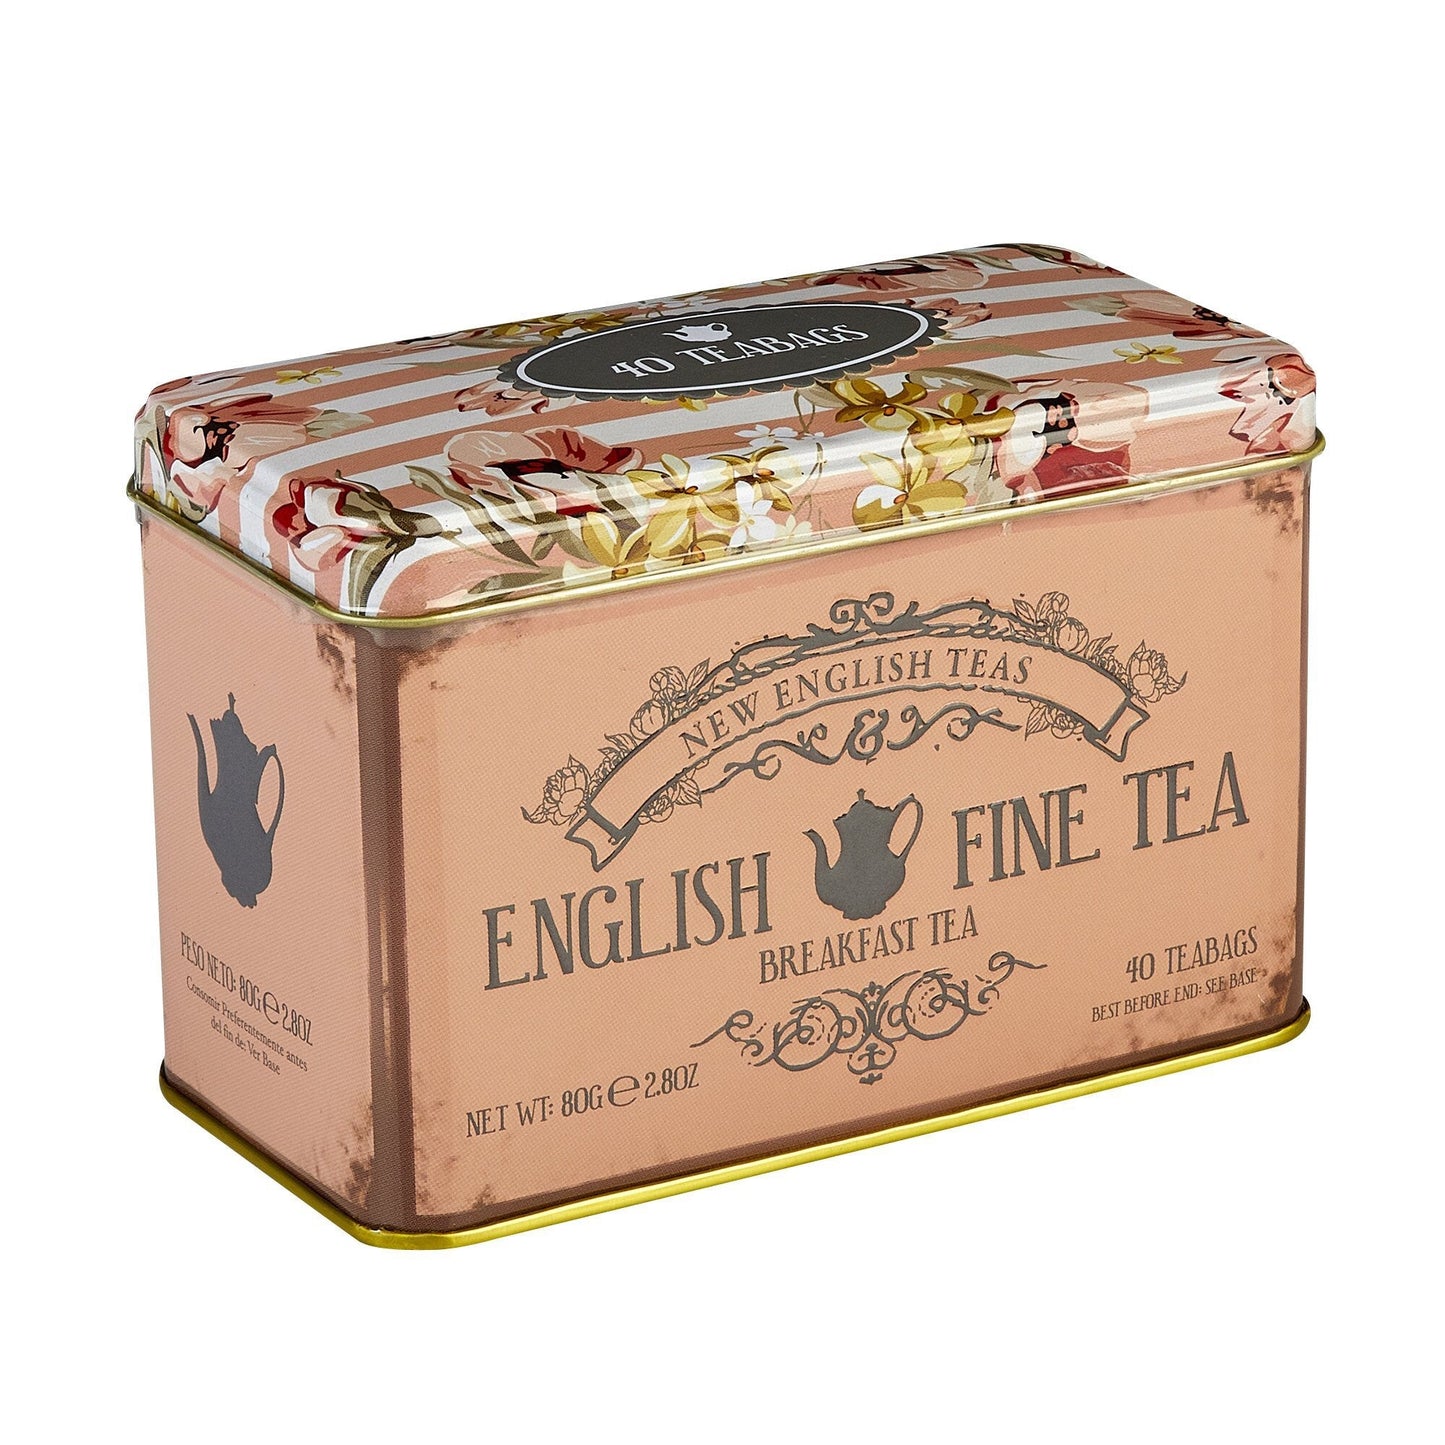 English Fine Tea - 40 Breakfast Teabags